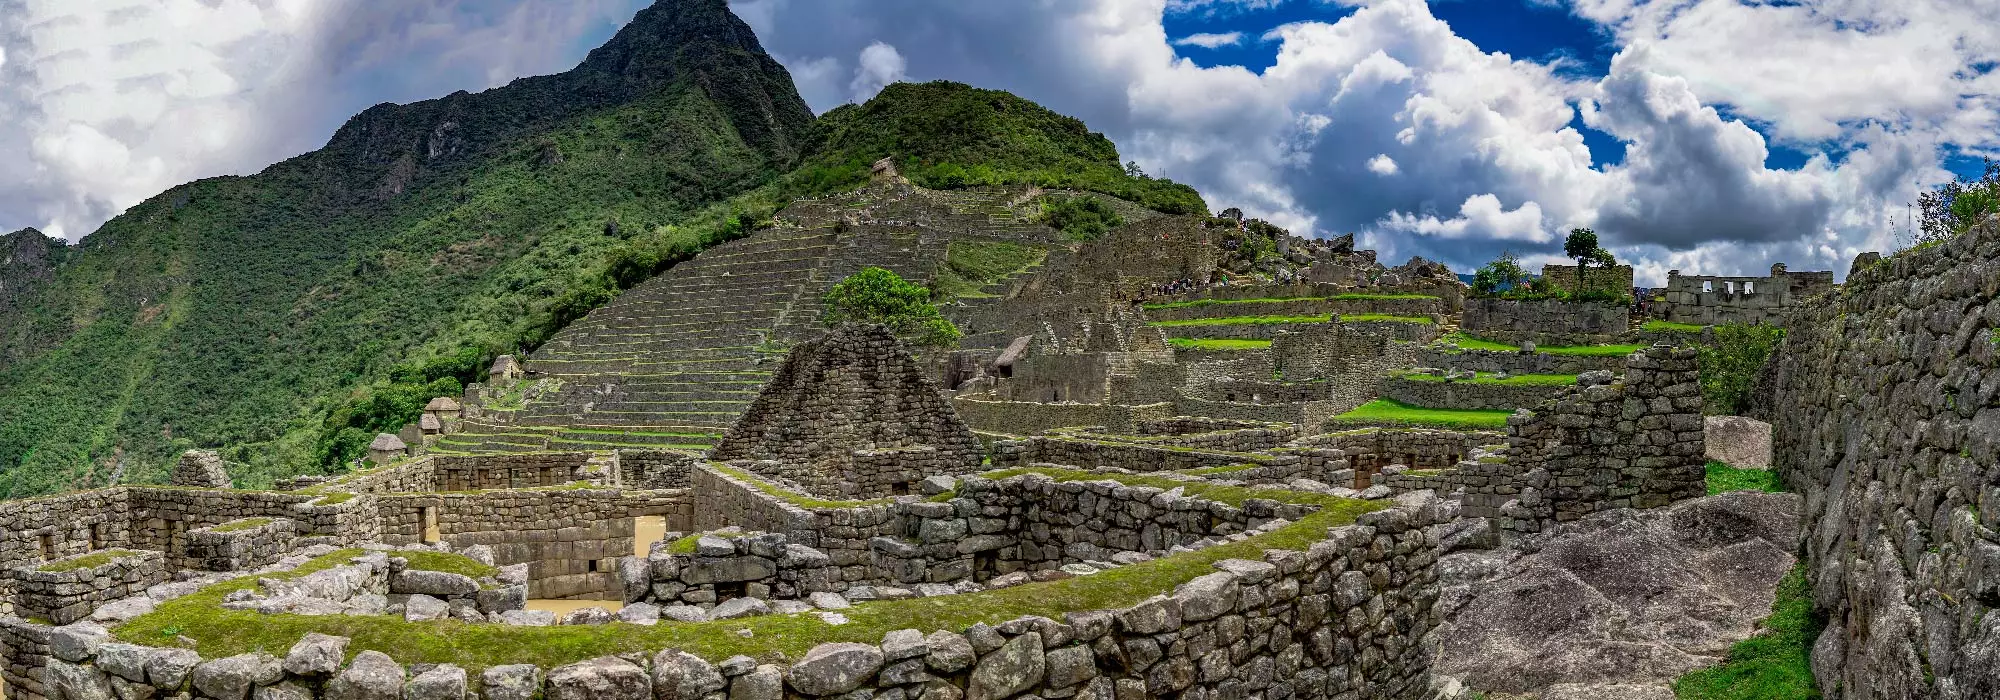 A Guide to Hiking to Machu Picchu